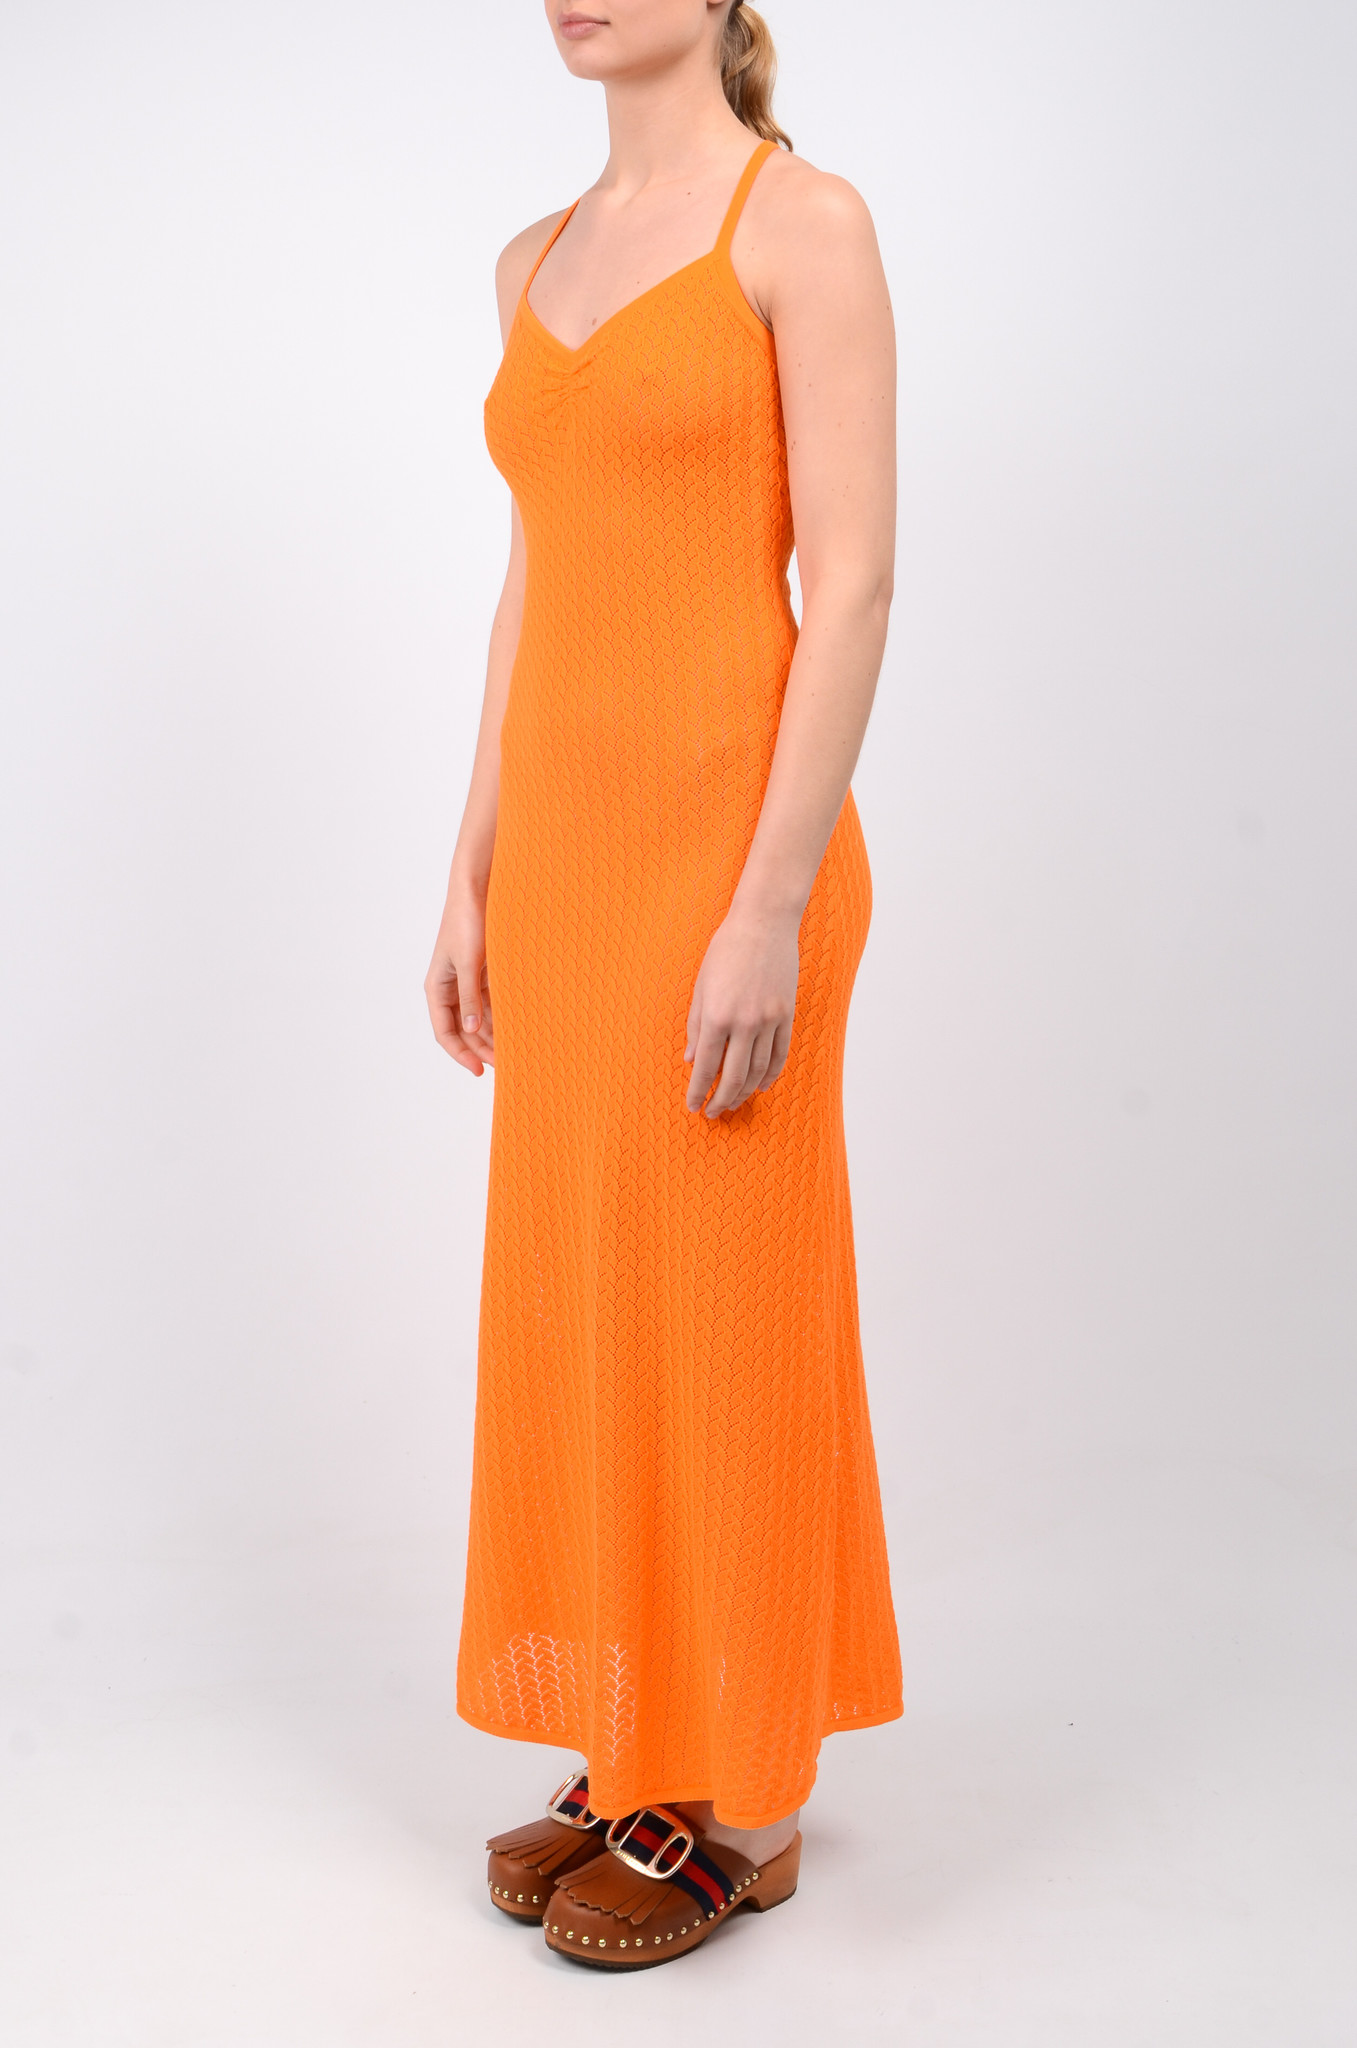 Taliana Dress in Orange-4